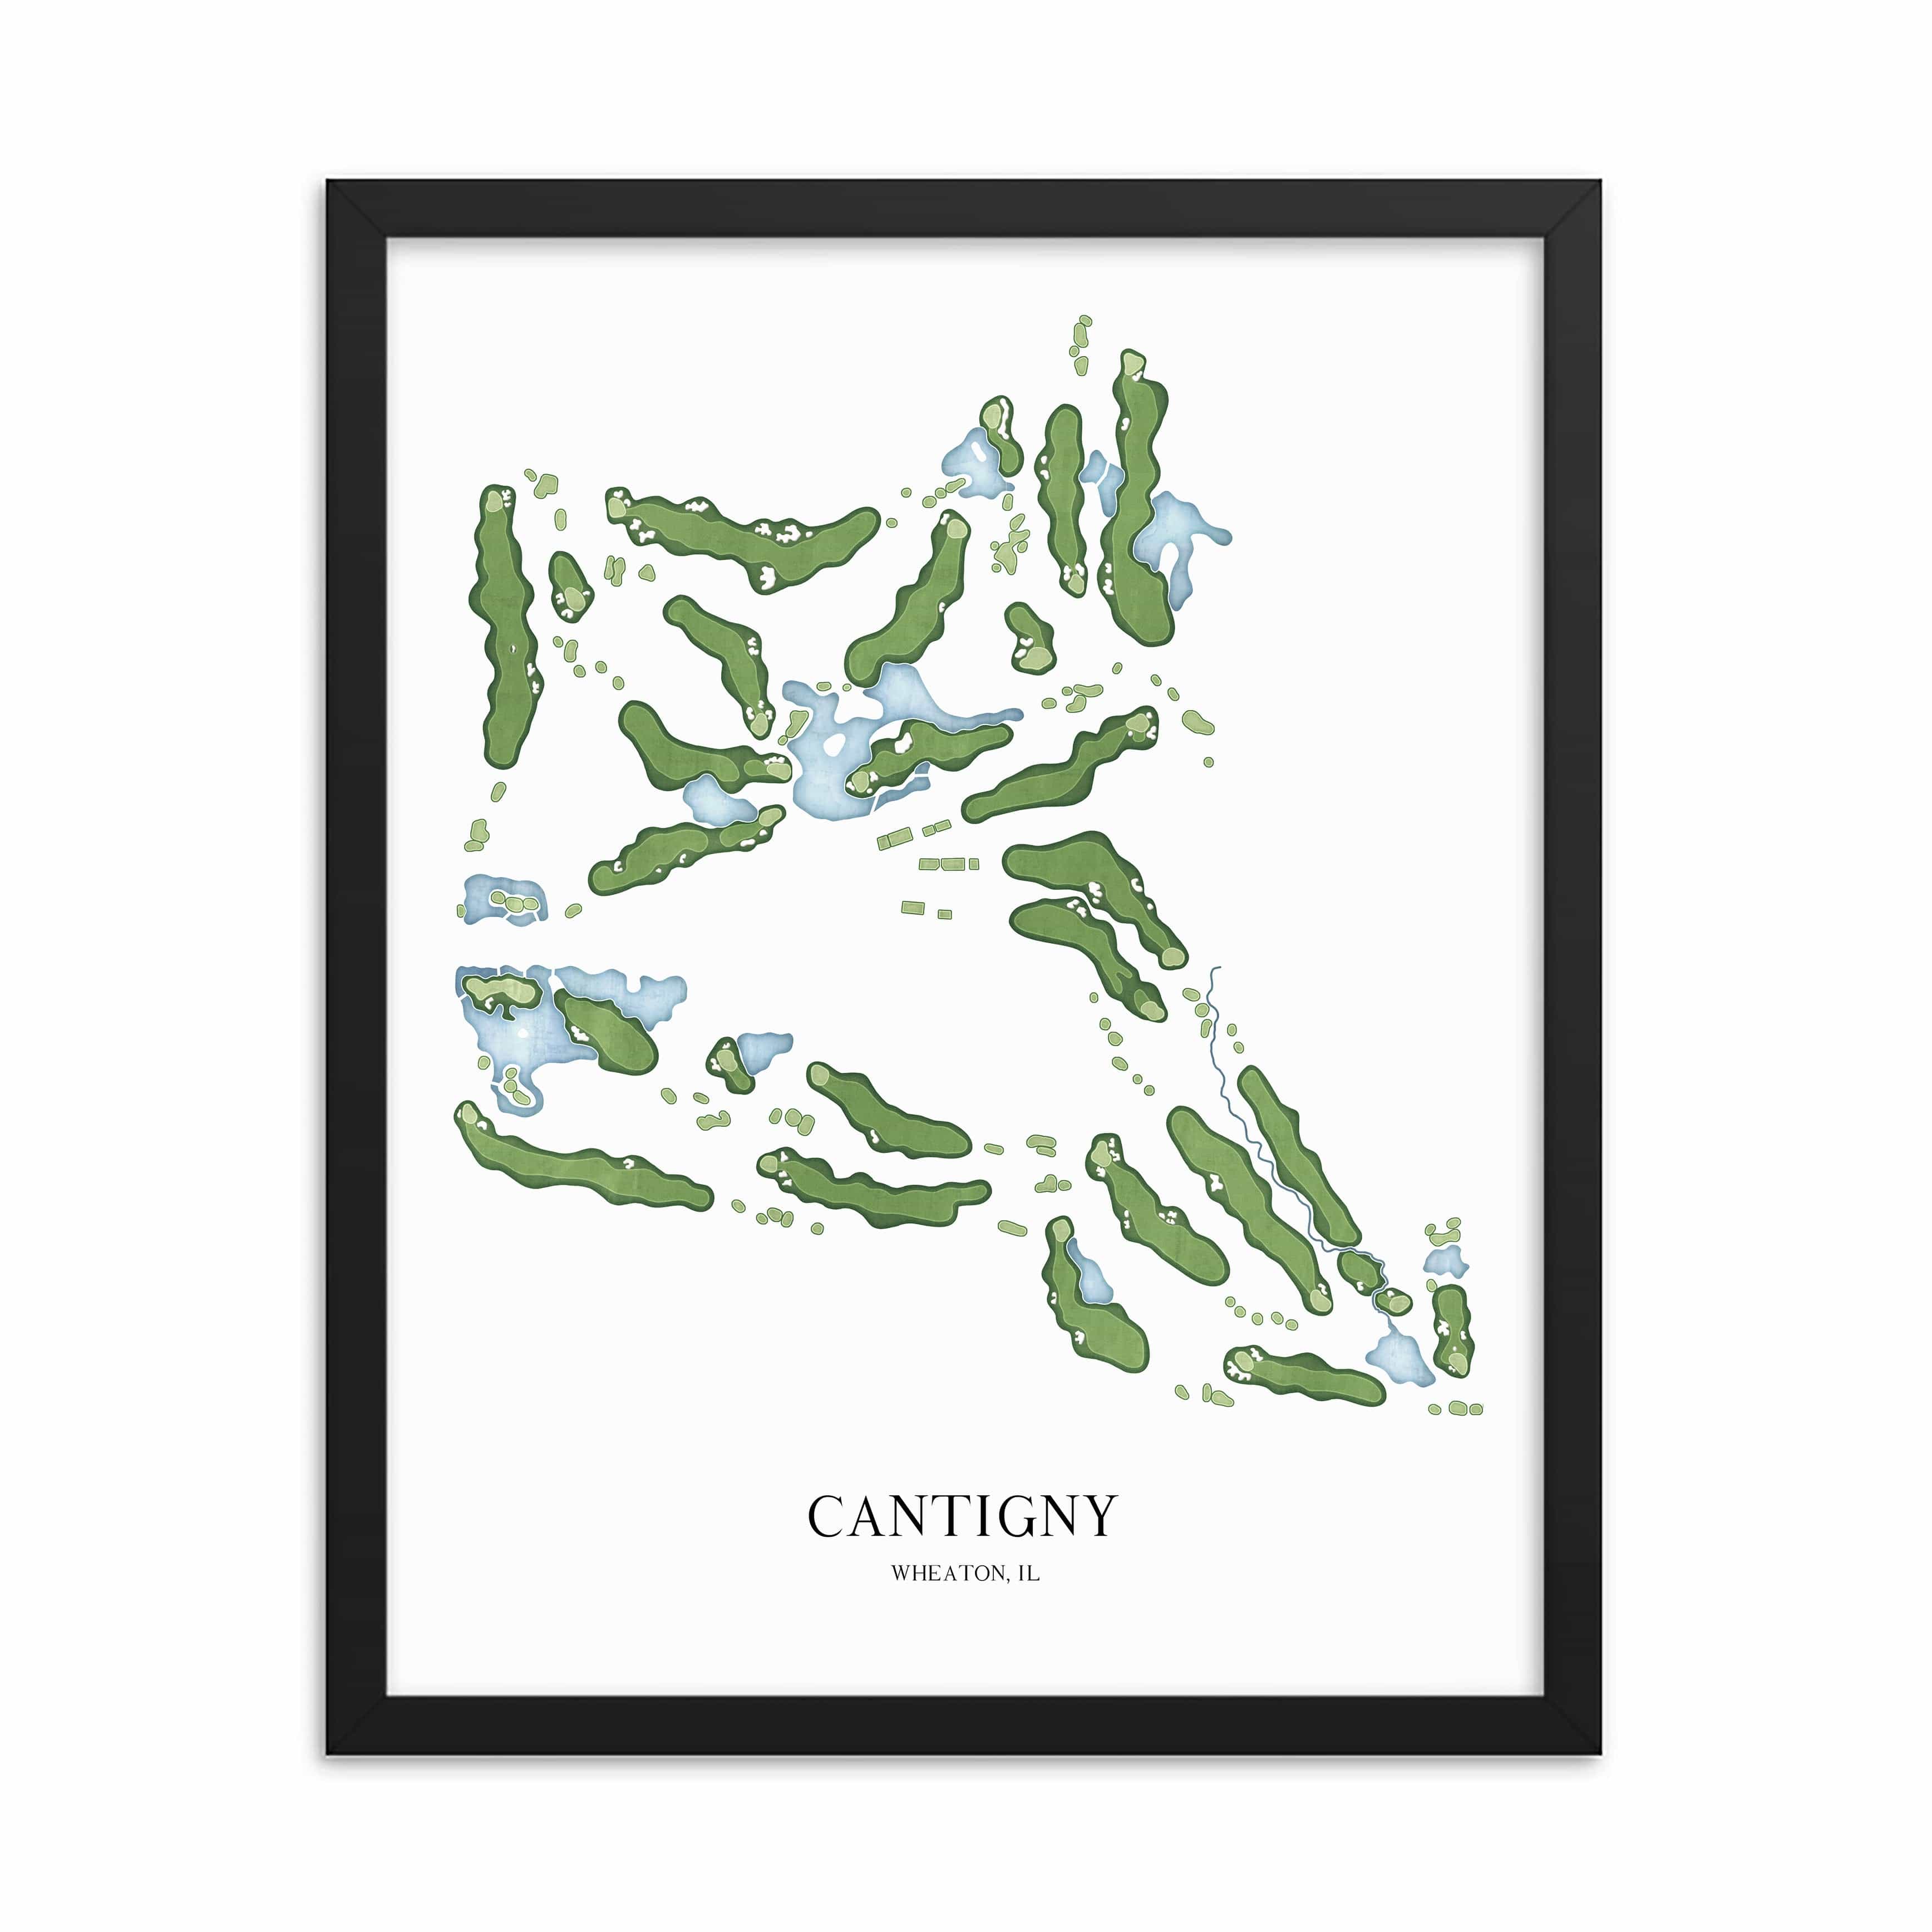 The 19th Hole Golf Shop - Golf Course Prints -  Cantigny Golf Course Map